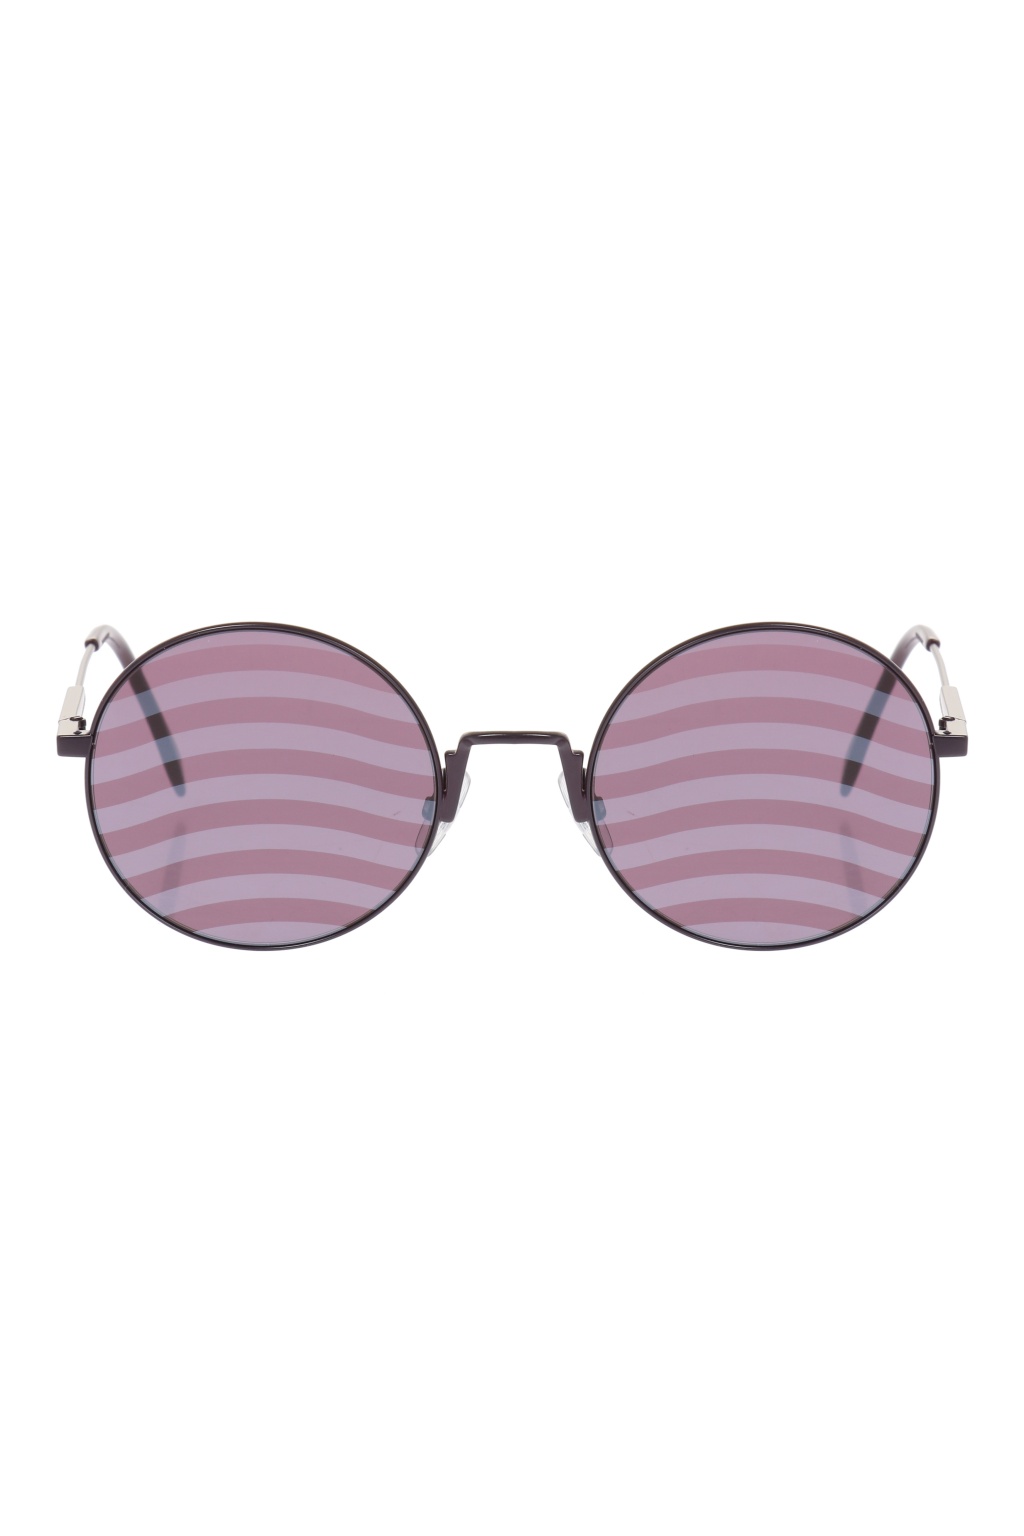 Fendi Waves Sunglasses